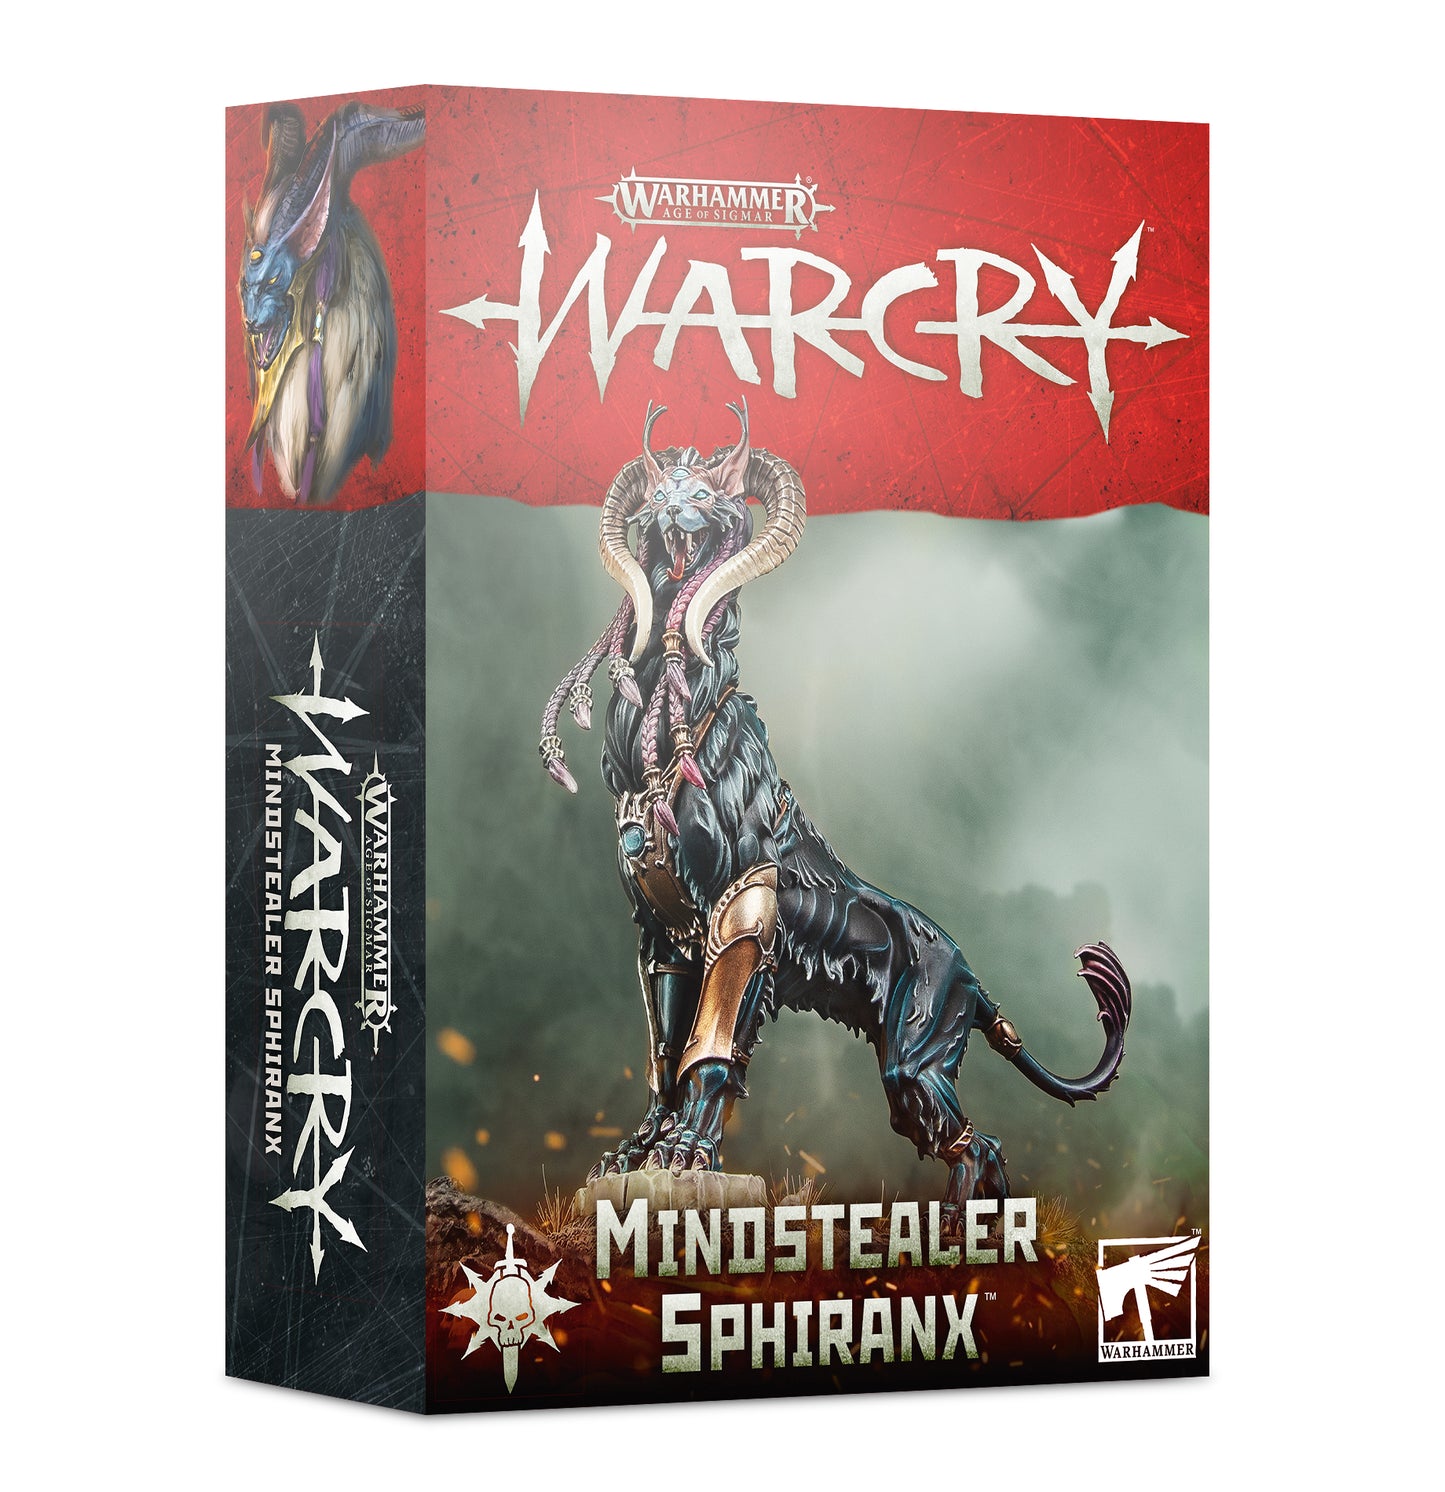 Warcry - Mindstealer Sphiranx